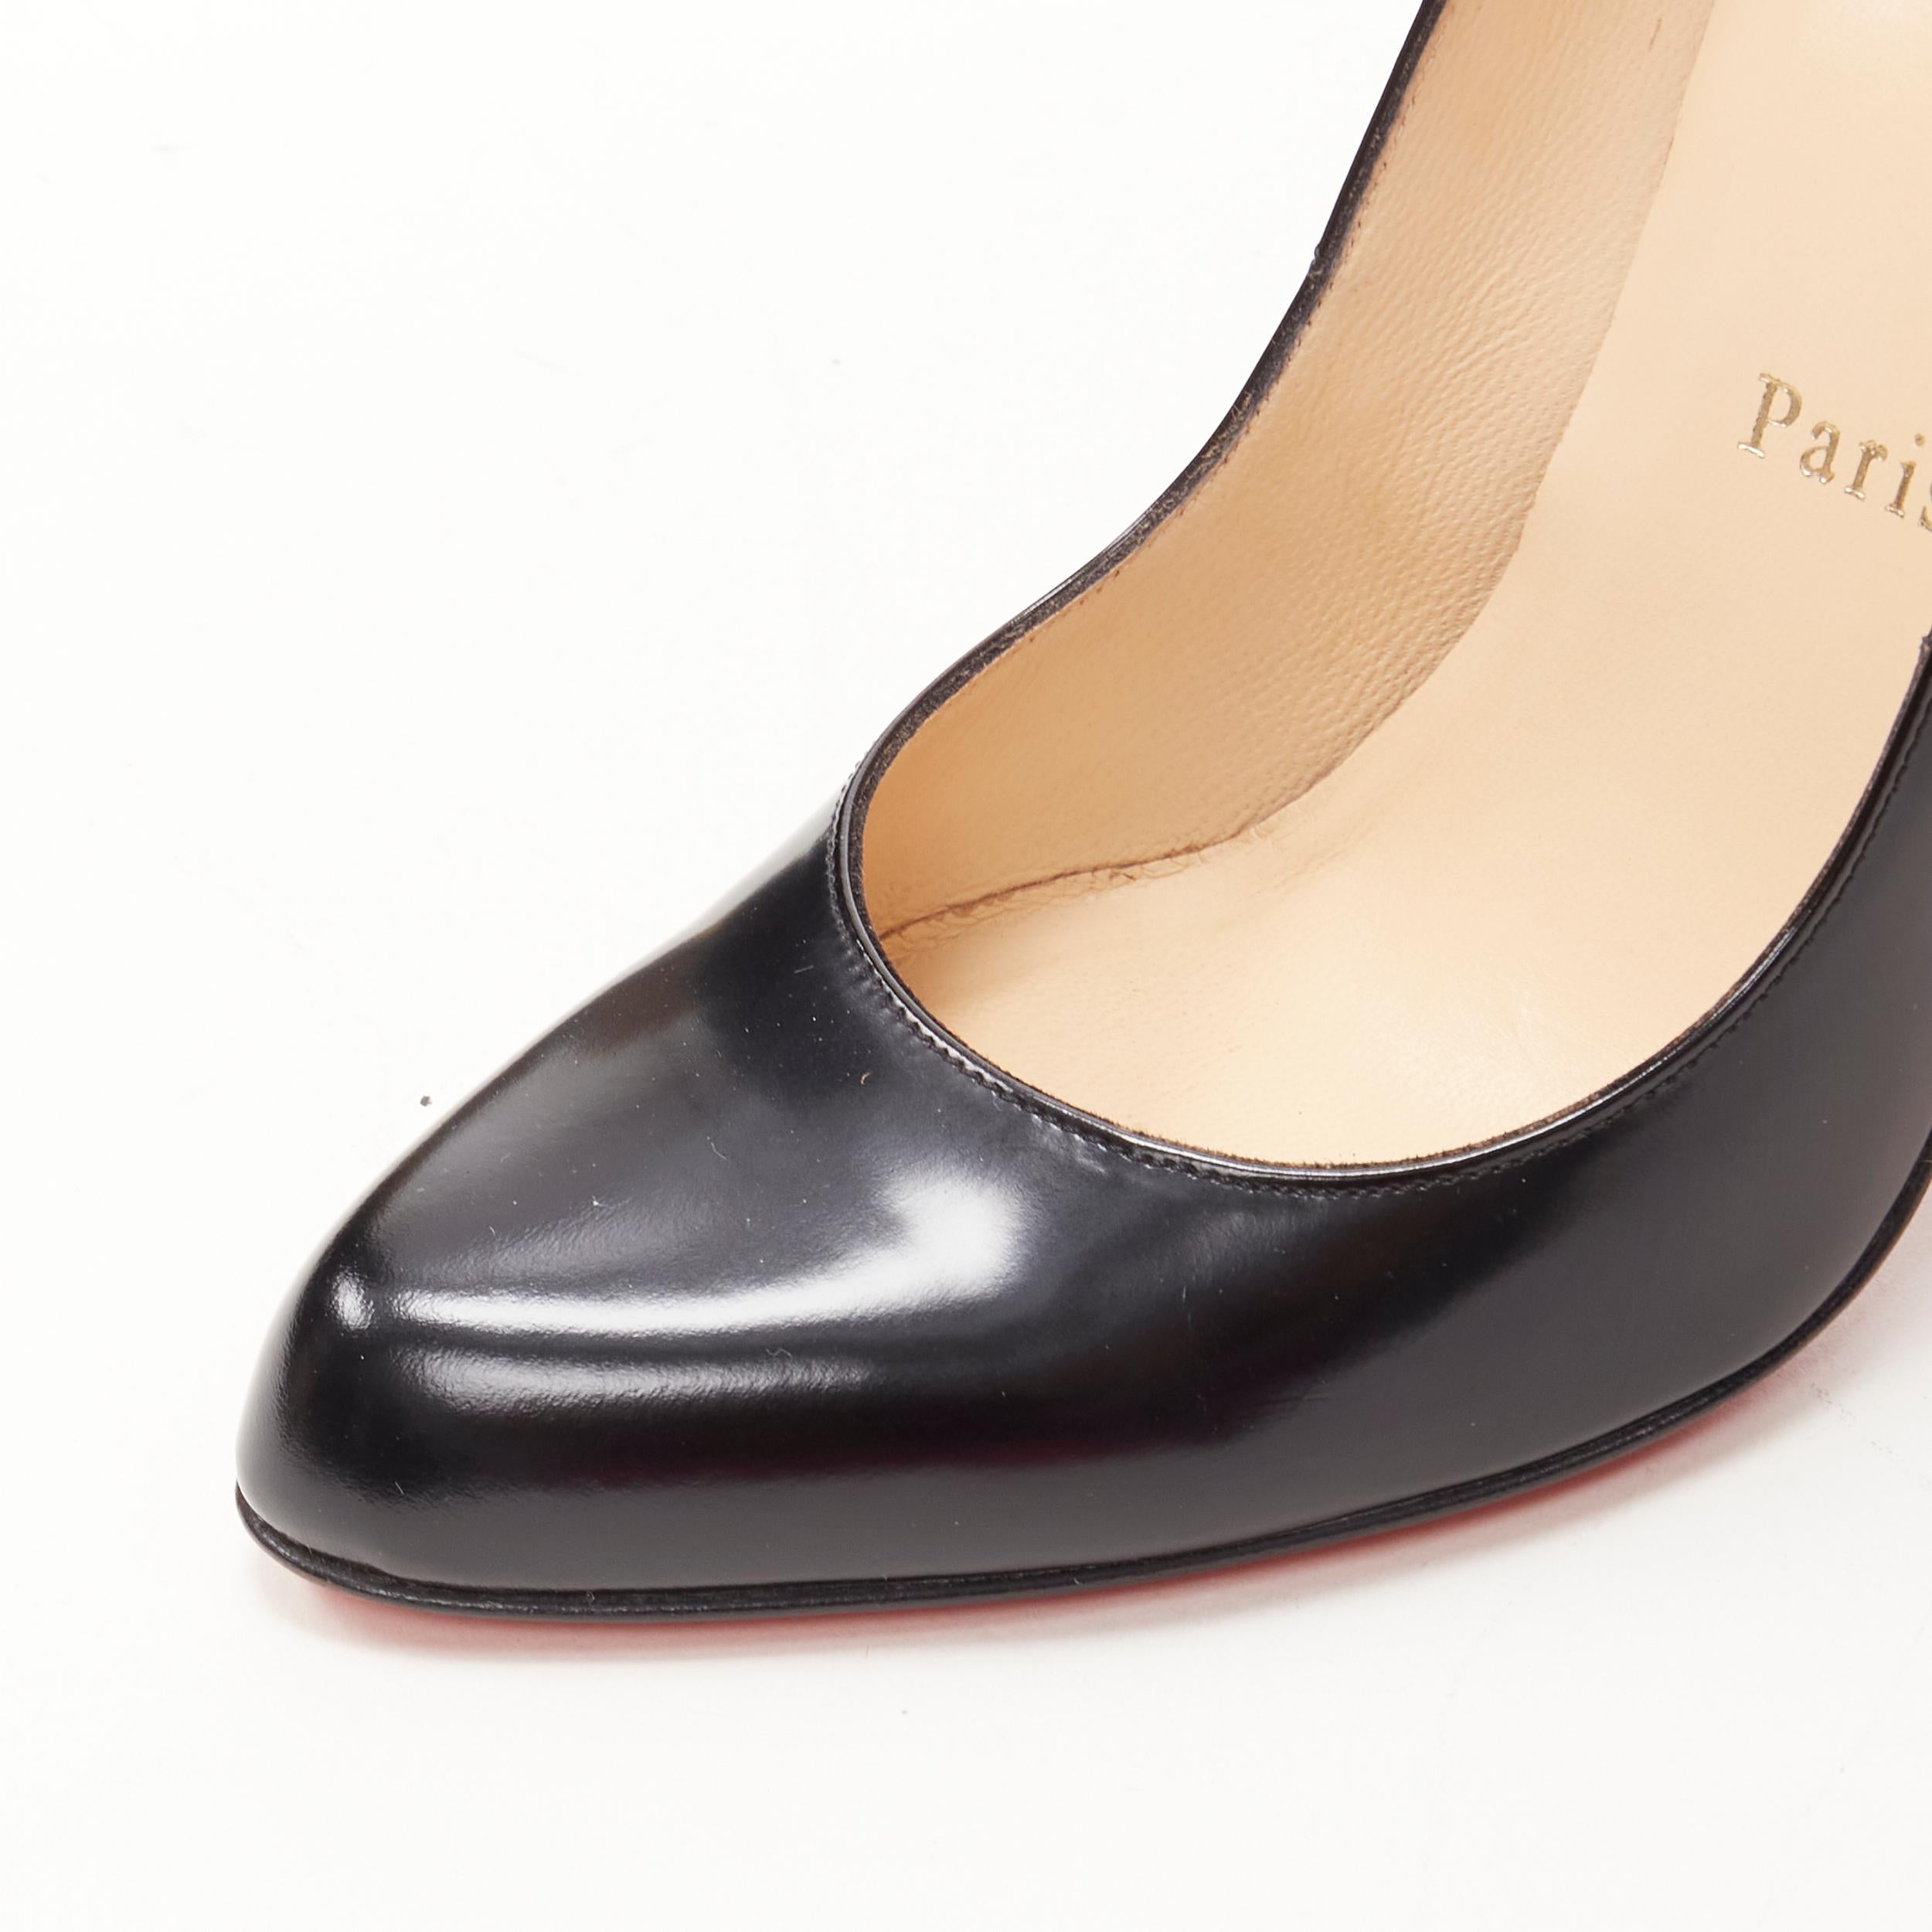 Women's CHRISTIAN LOUBOUTIN black polished leather high heel classic court shoes EU38